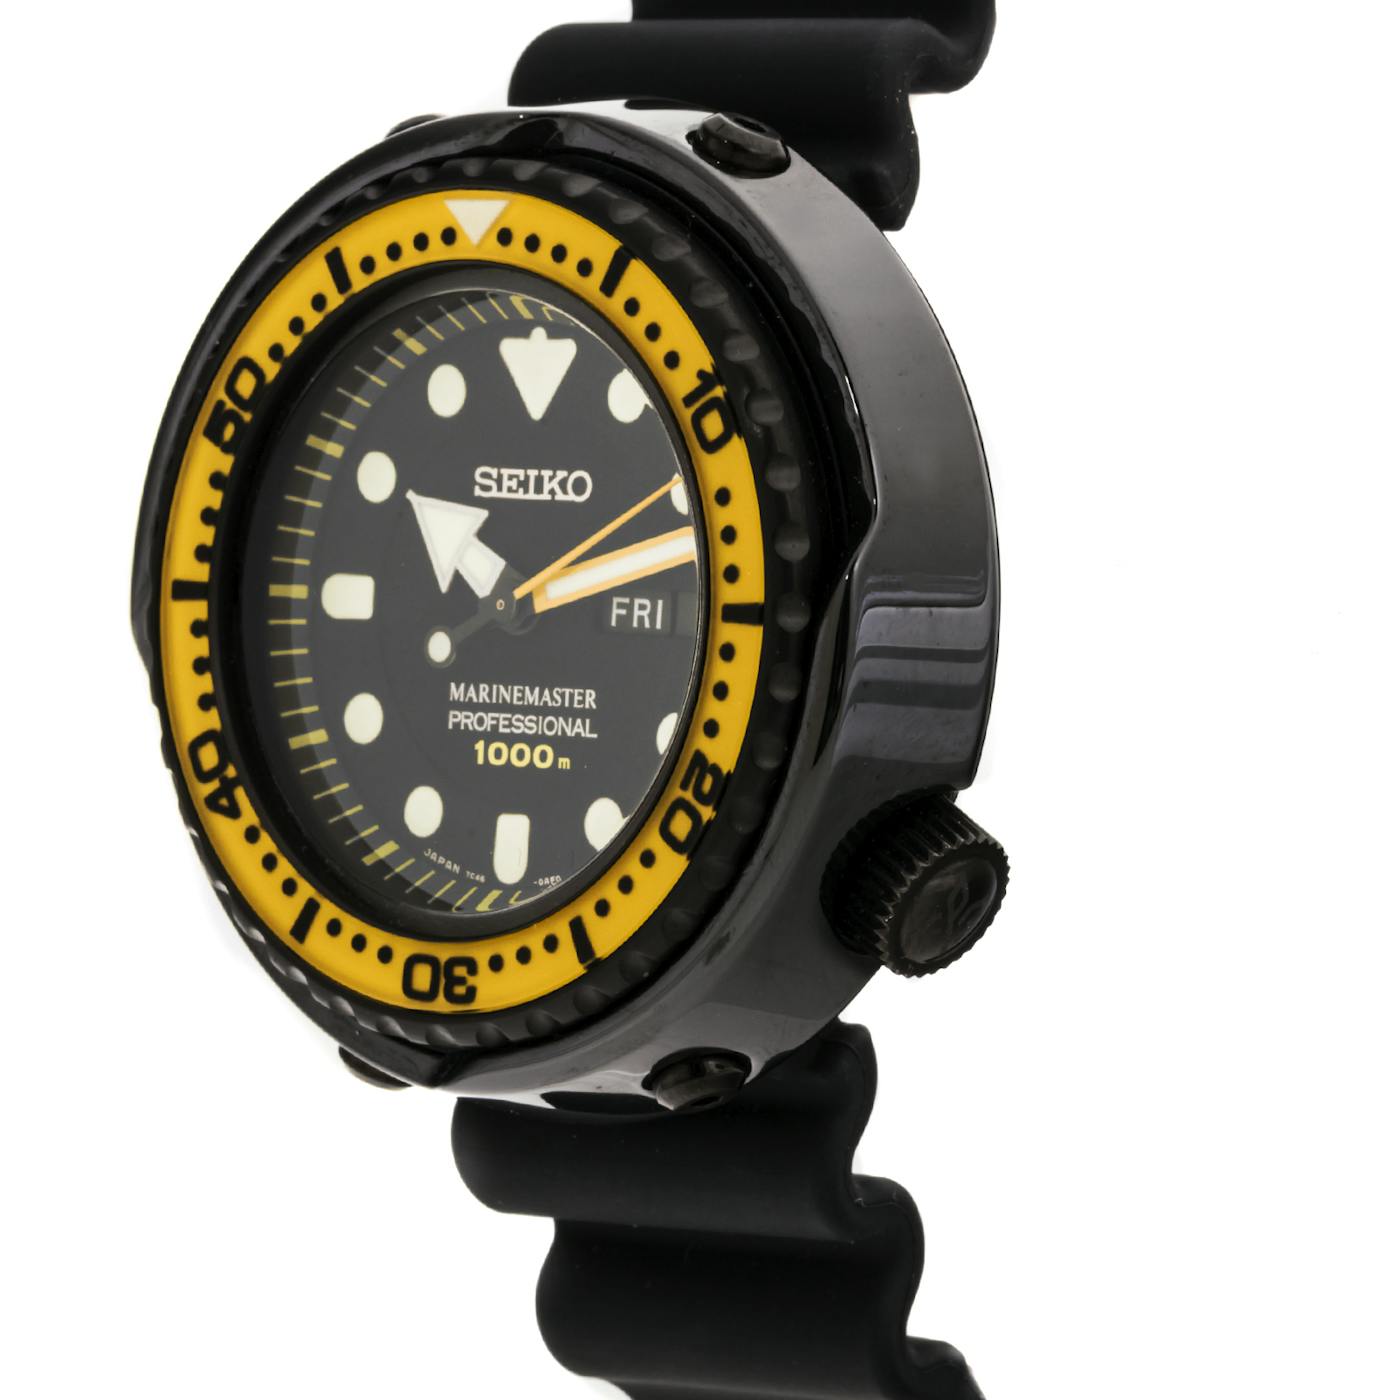 Seiko Prospex Marine Master Professional SBBN027 | WatchBox